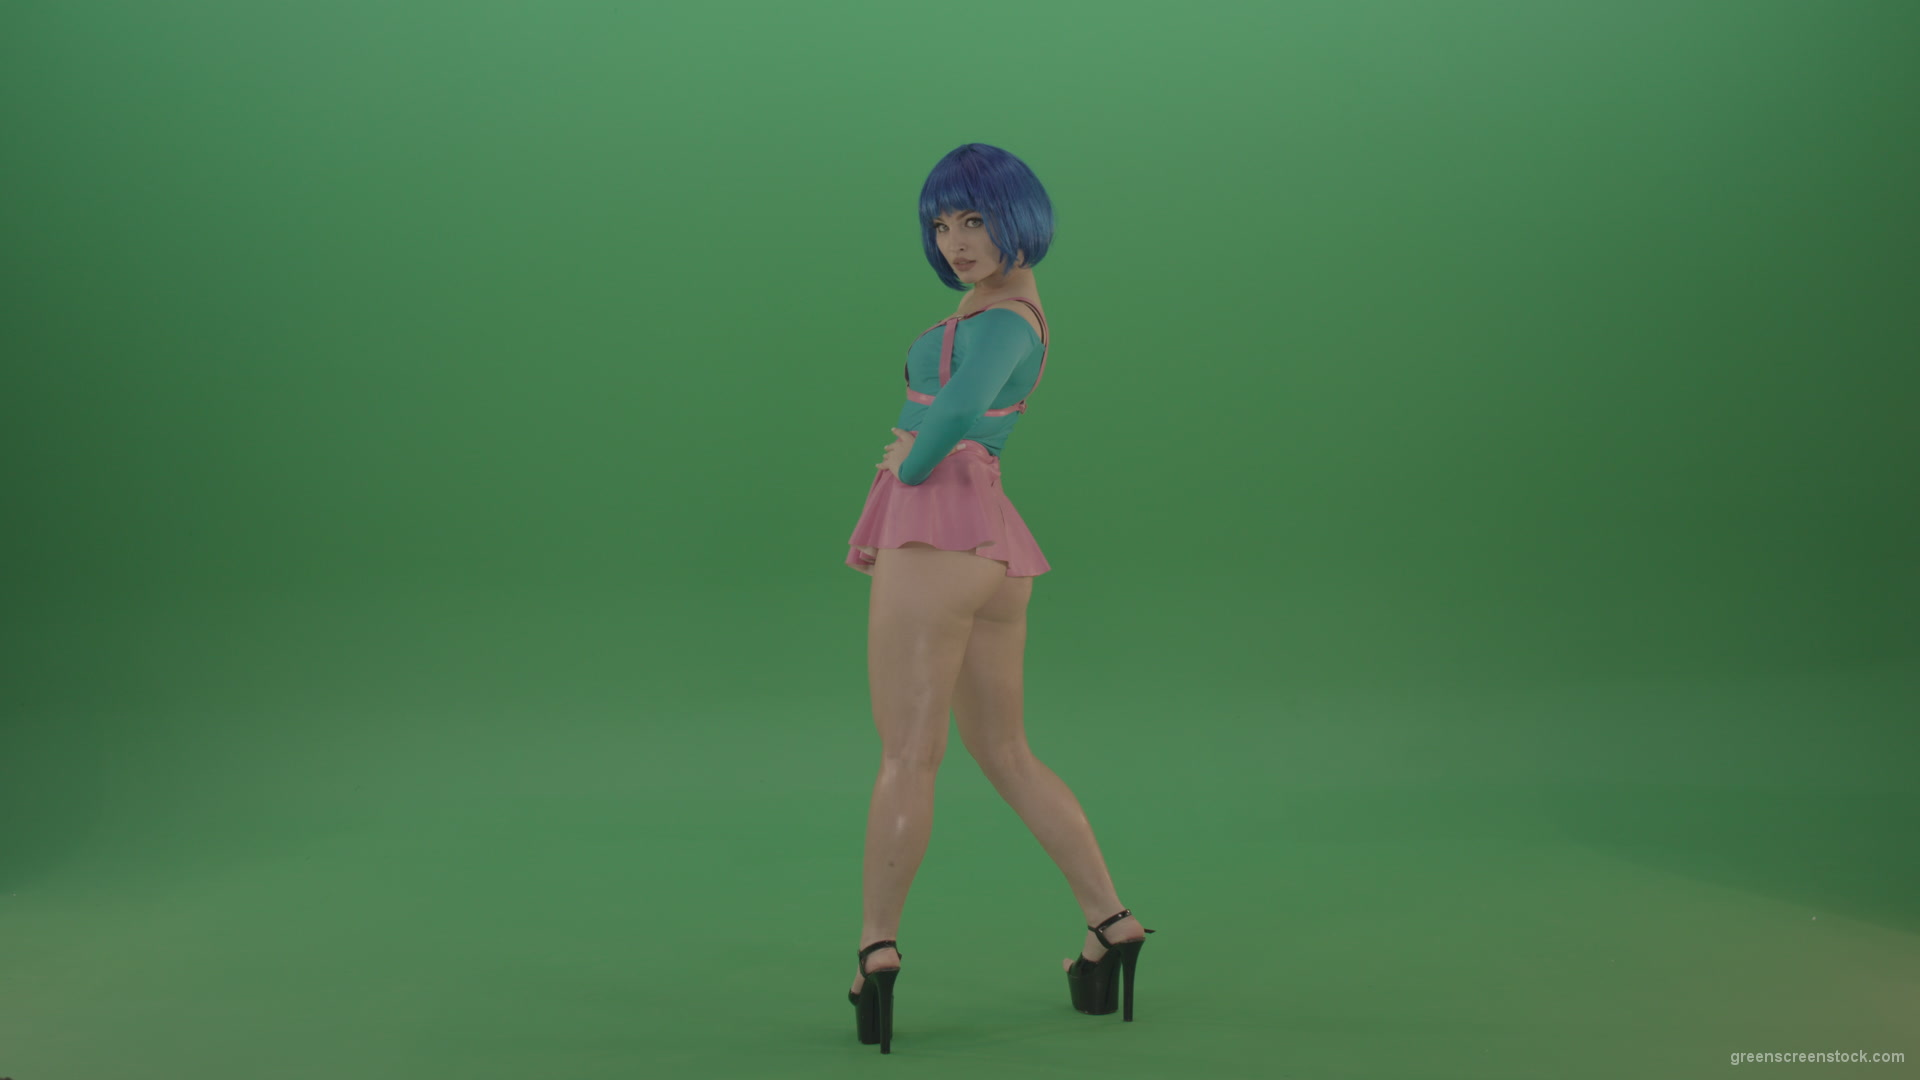 Sexy-erotic-girl-posing-with-blue-hair-on-green-screen_001 Green Screen Stock